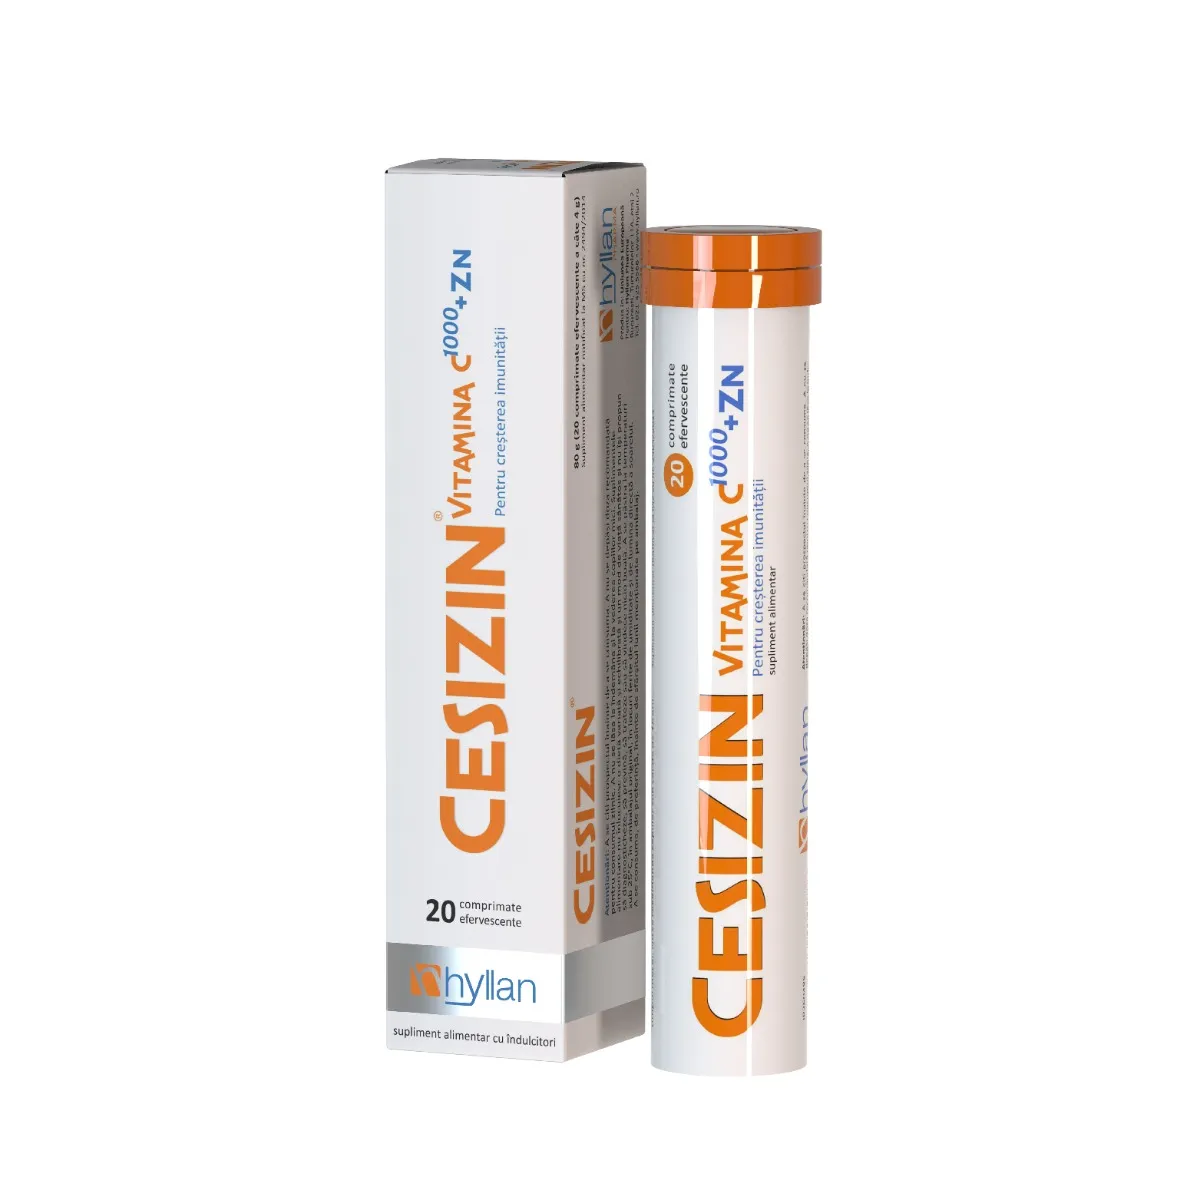 Cesizin Vitamina C 1000mg + Zinc, 20 comprimate efervescente, Hyllan Pharma